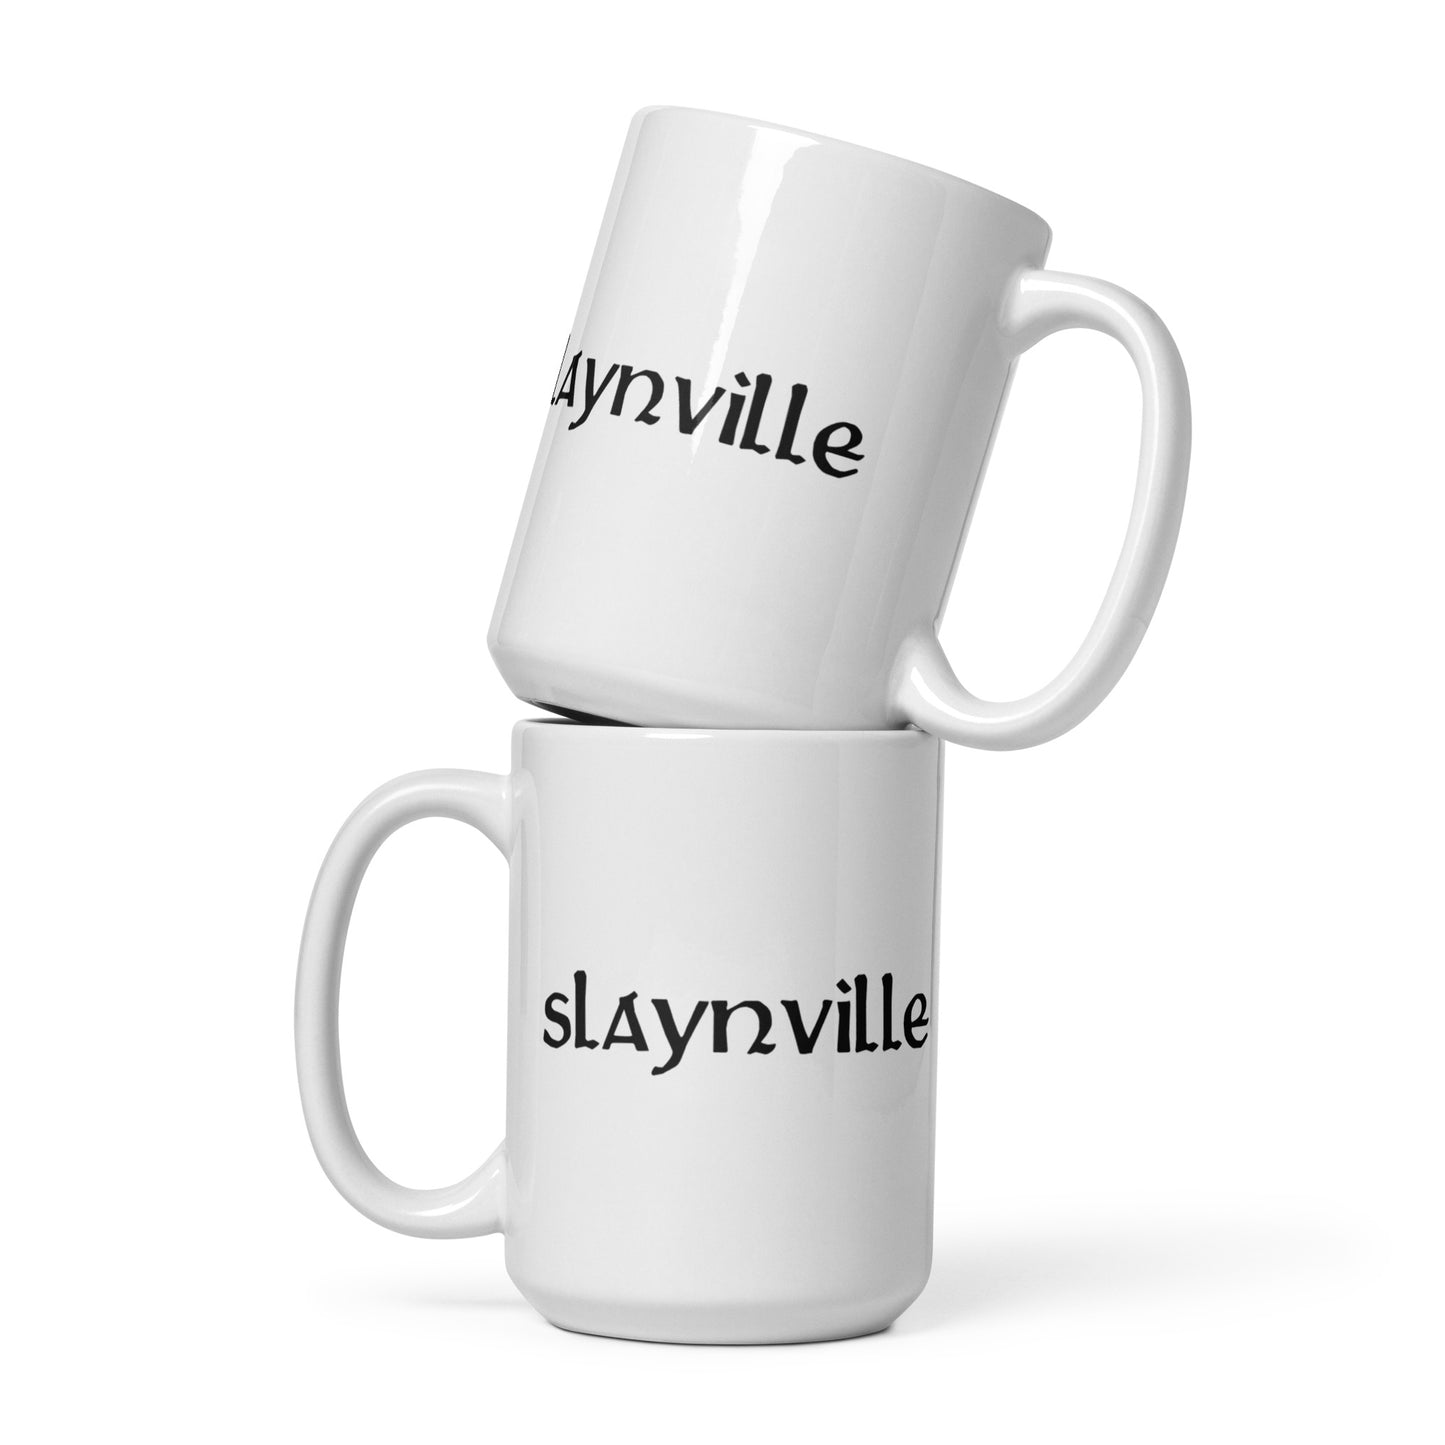 Slaynville Mug